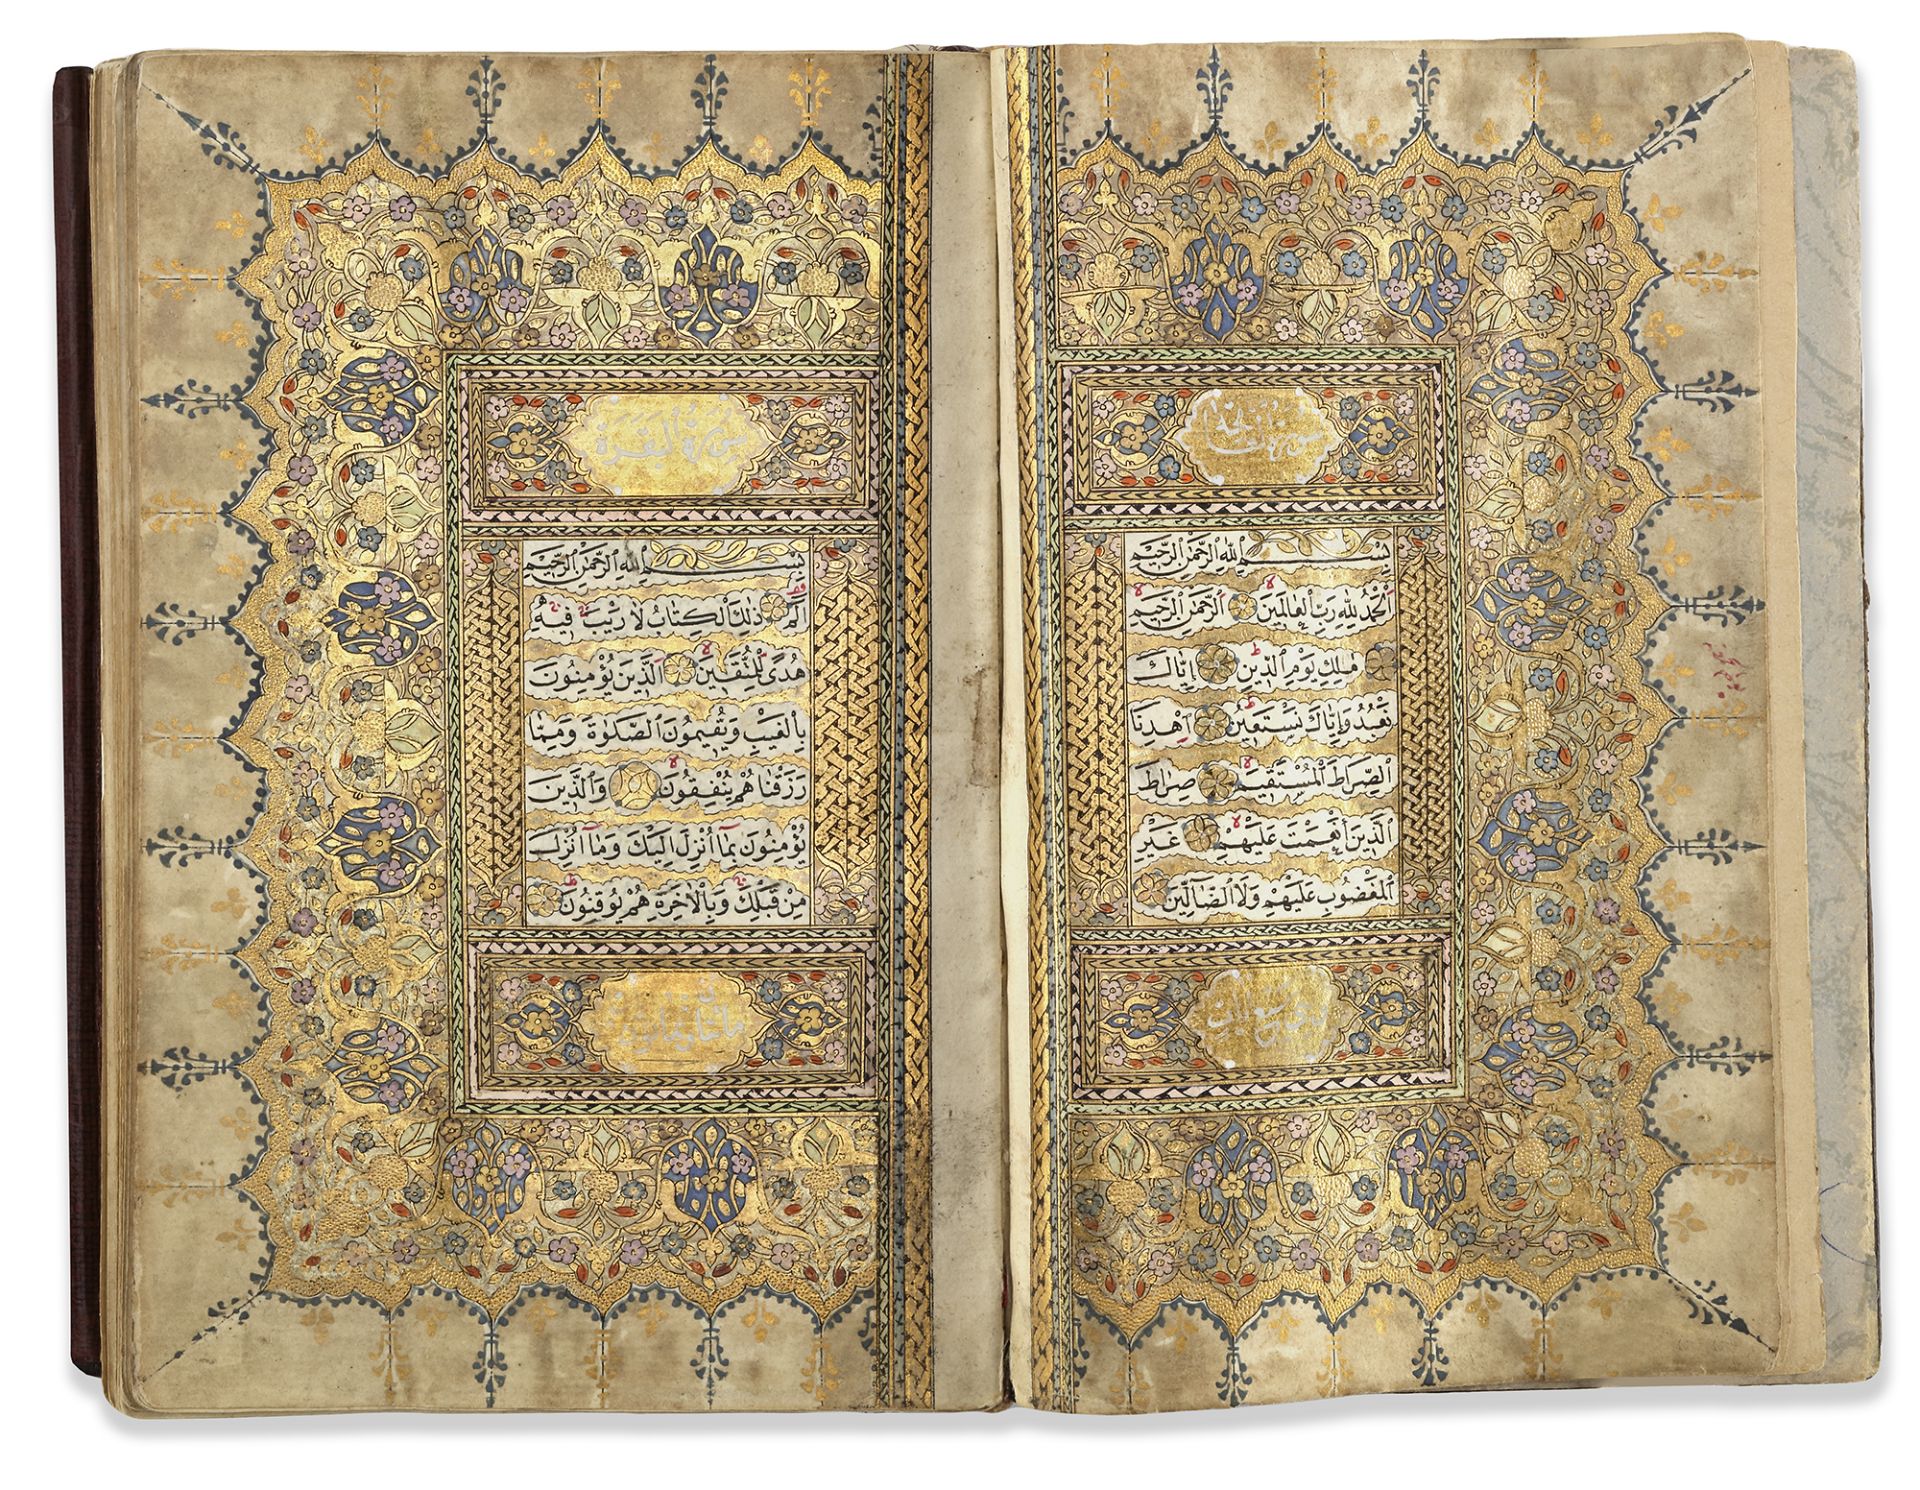 A QURAN SIGNED HAFIZ MEHMED VEHBI, OTTOMAN TURKEY, DATED 1219 AH/1804 AD